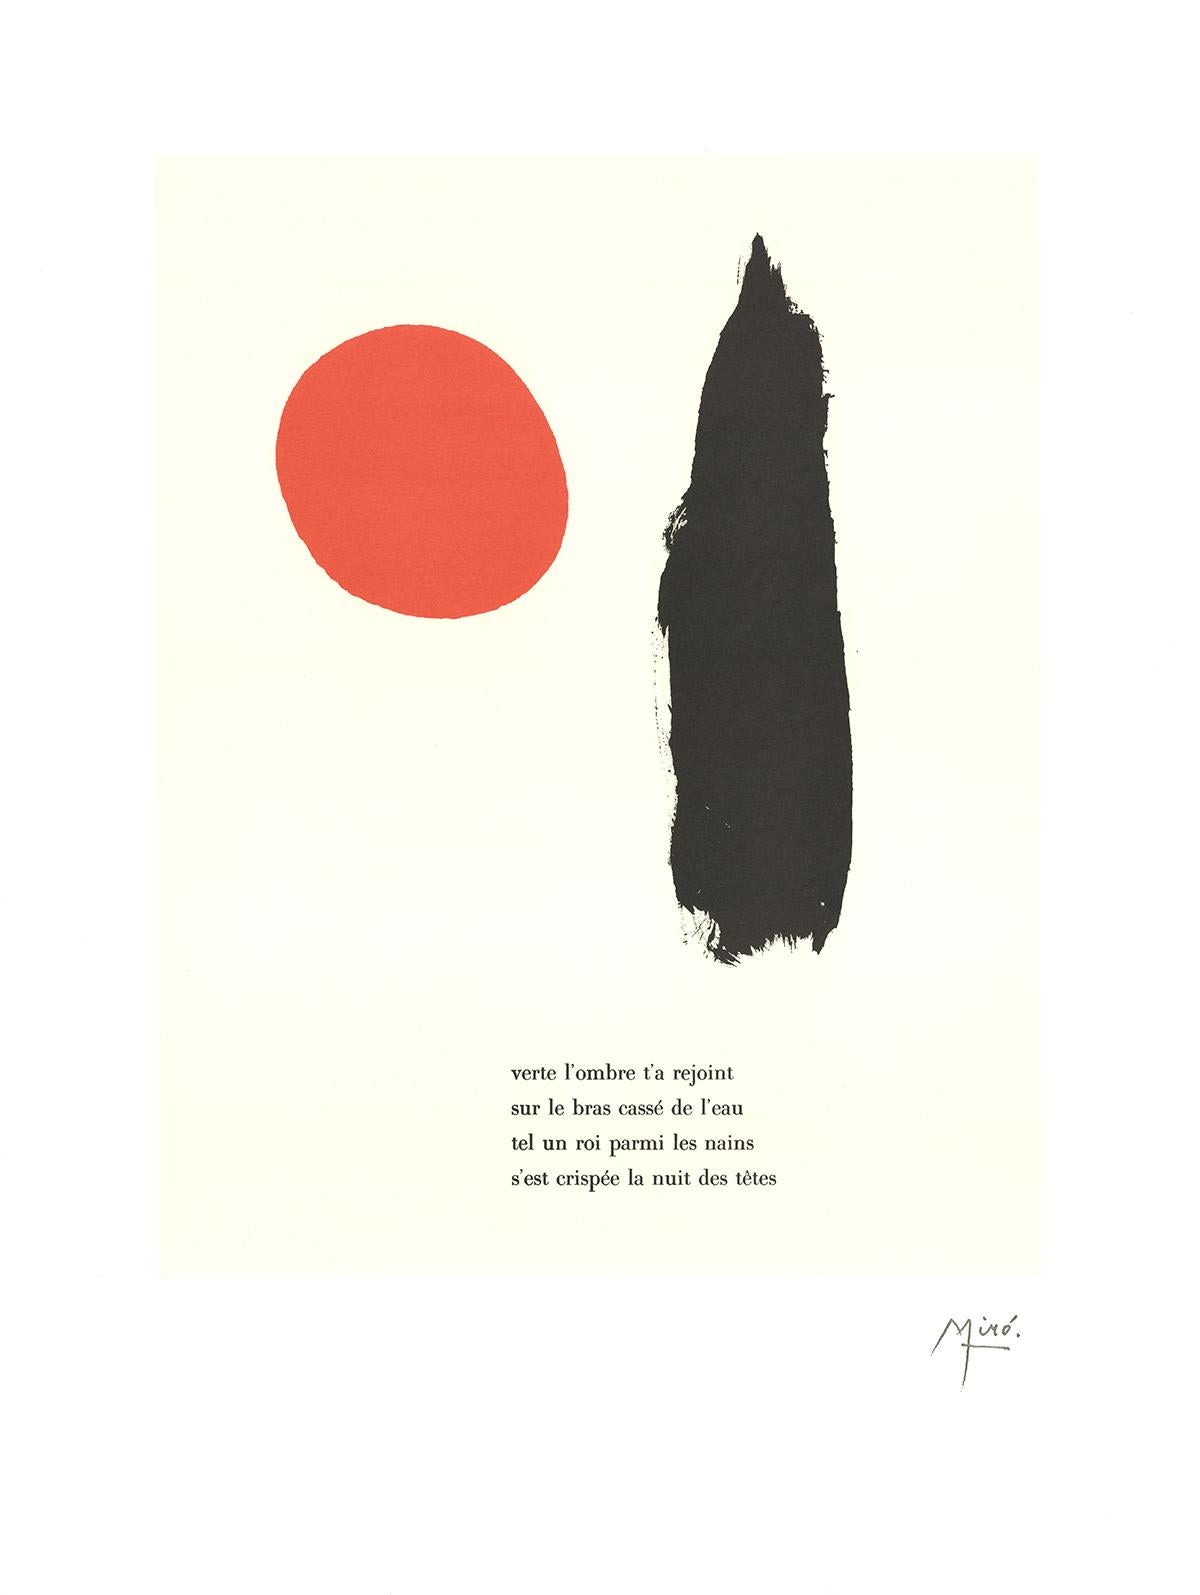 Joan Miro-Illustrated Poems-"Parler Seul" V-23.5" x 17.75"-Lithograph-2004 - Print by Joan Miró